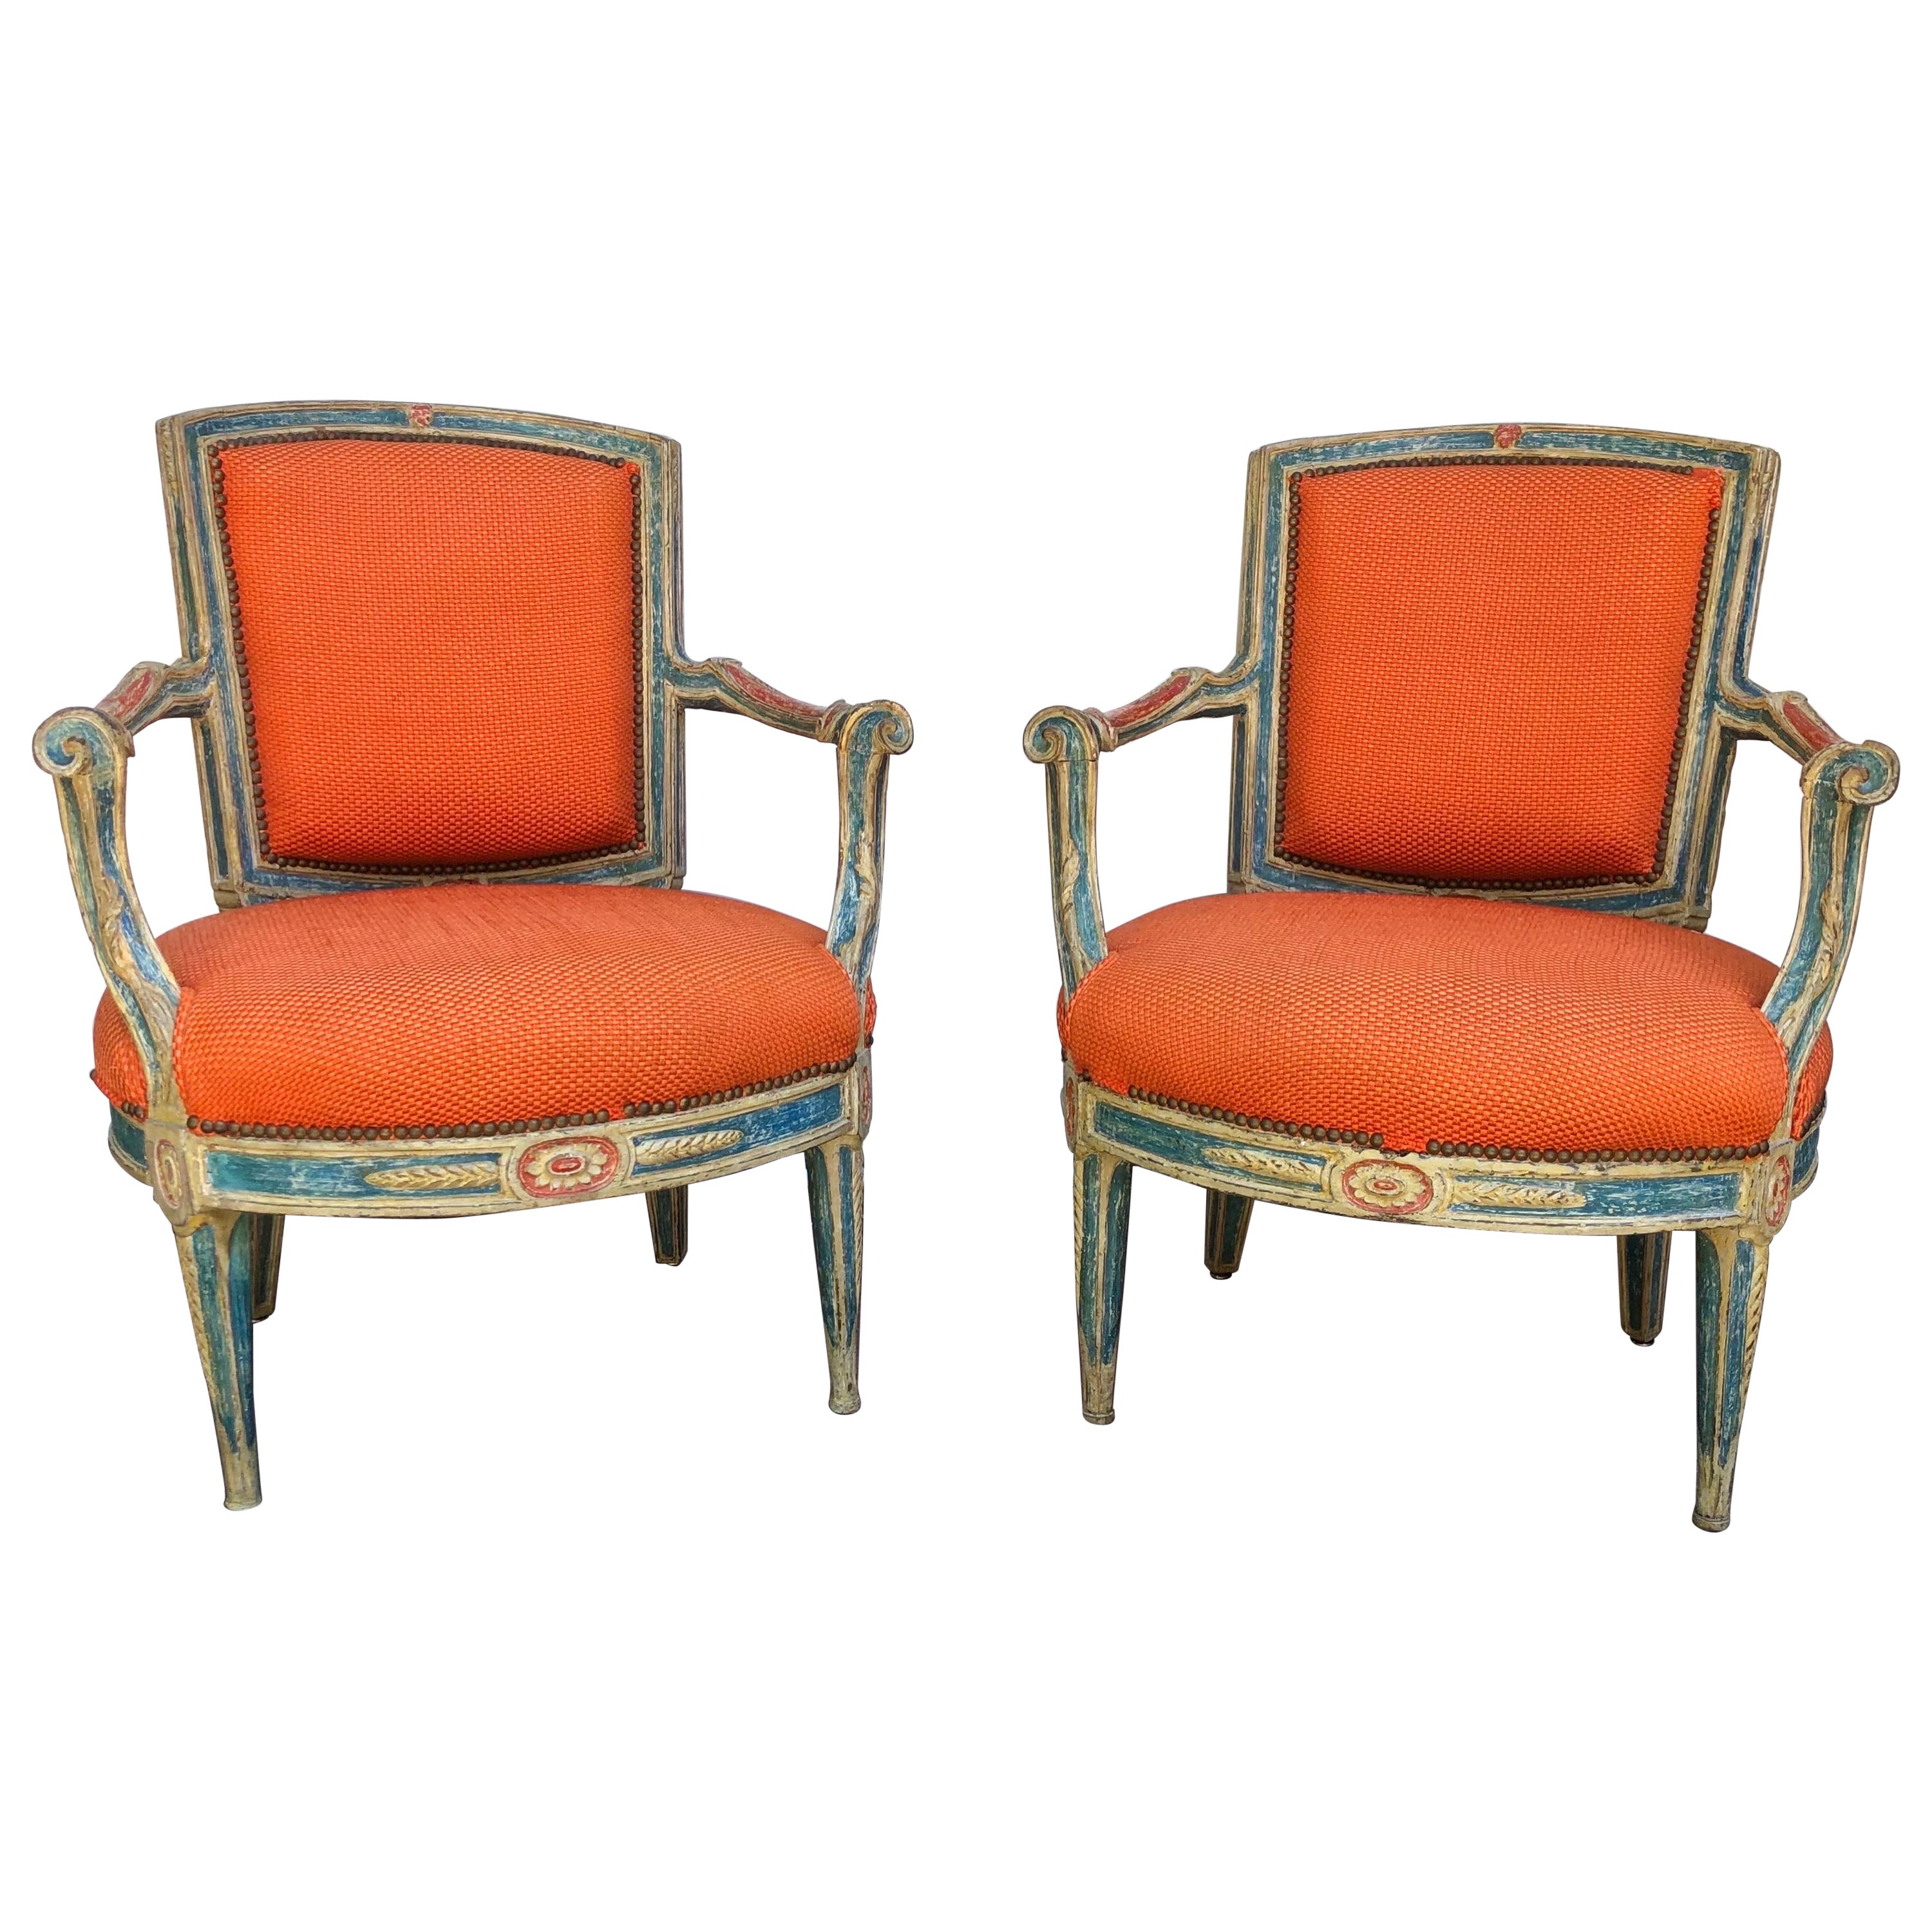 18. Jh. Zwei italienische Sessel mit klassizistischem Farbdekor